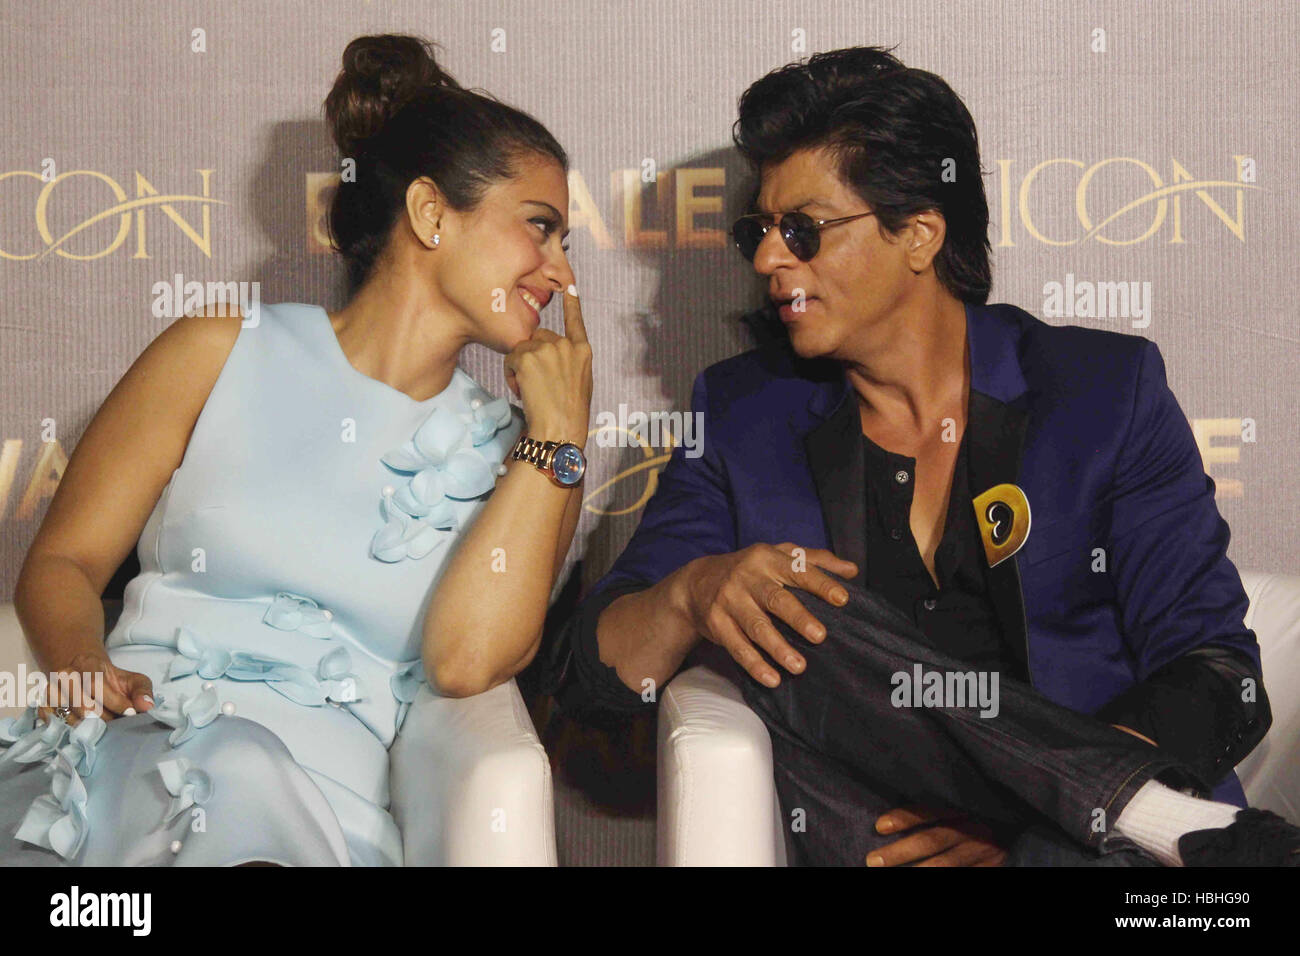 Shah Rukh Khan, attore indiano Bollywood e attrice kajol che parla al film Dilwale canzone lancio a Mumbai, India Foto Stock